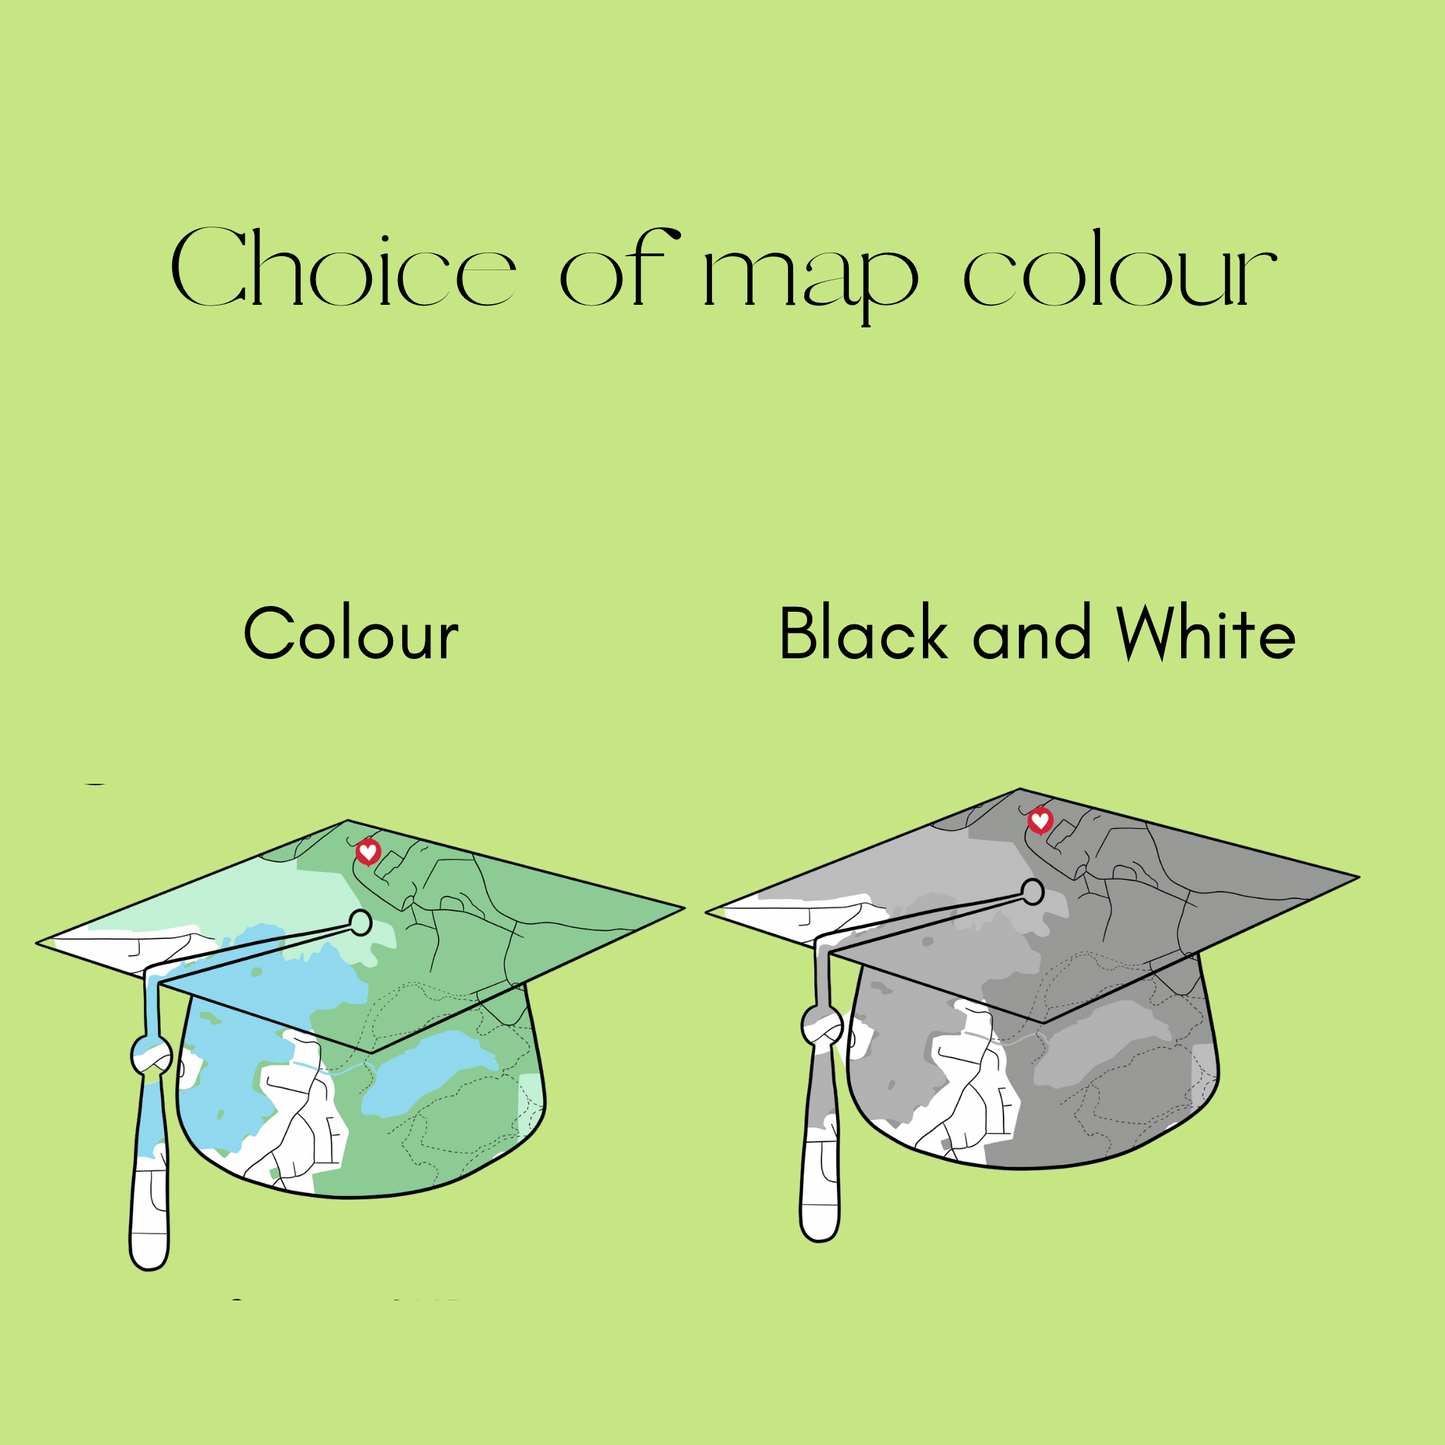 Graduation Map Illustration